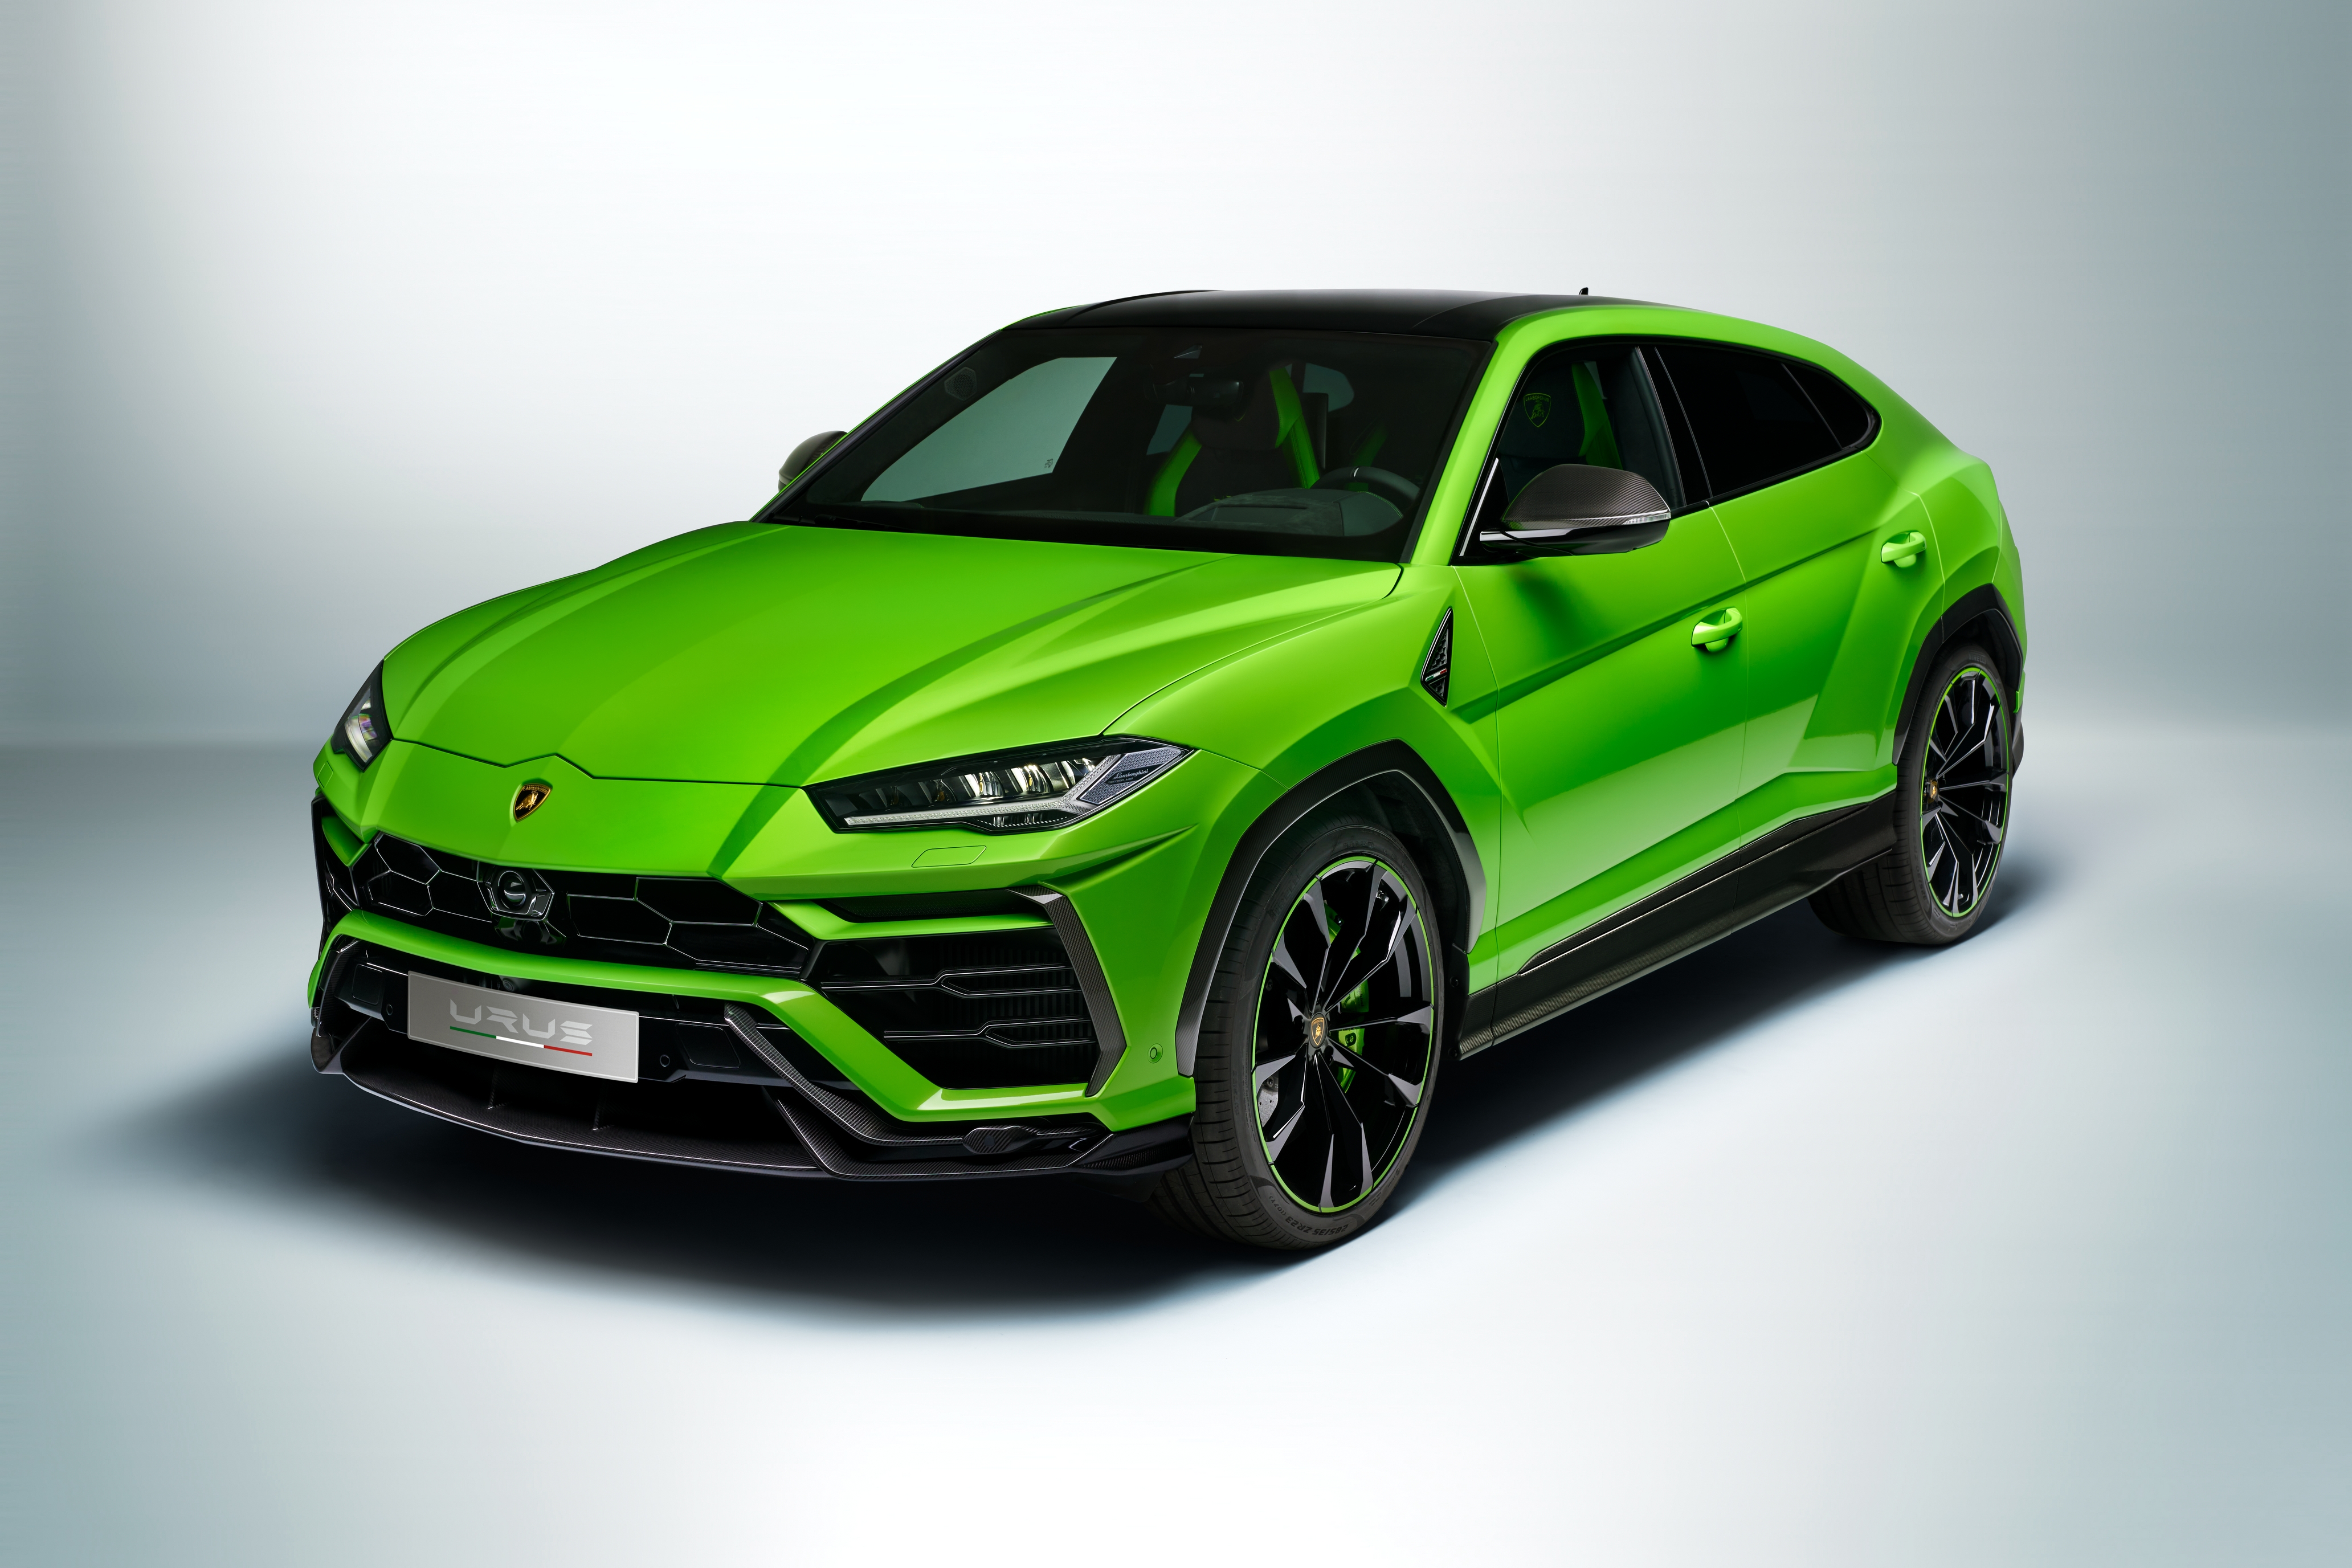 HD wallpaper, Green, White Background, 2020, Lamborghini Urus Pearl Capsule